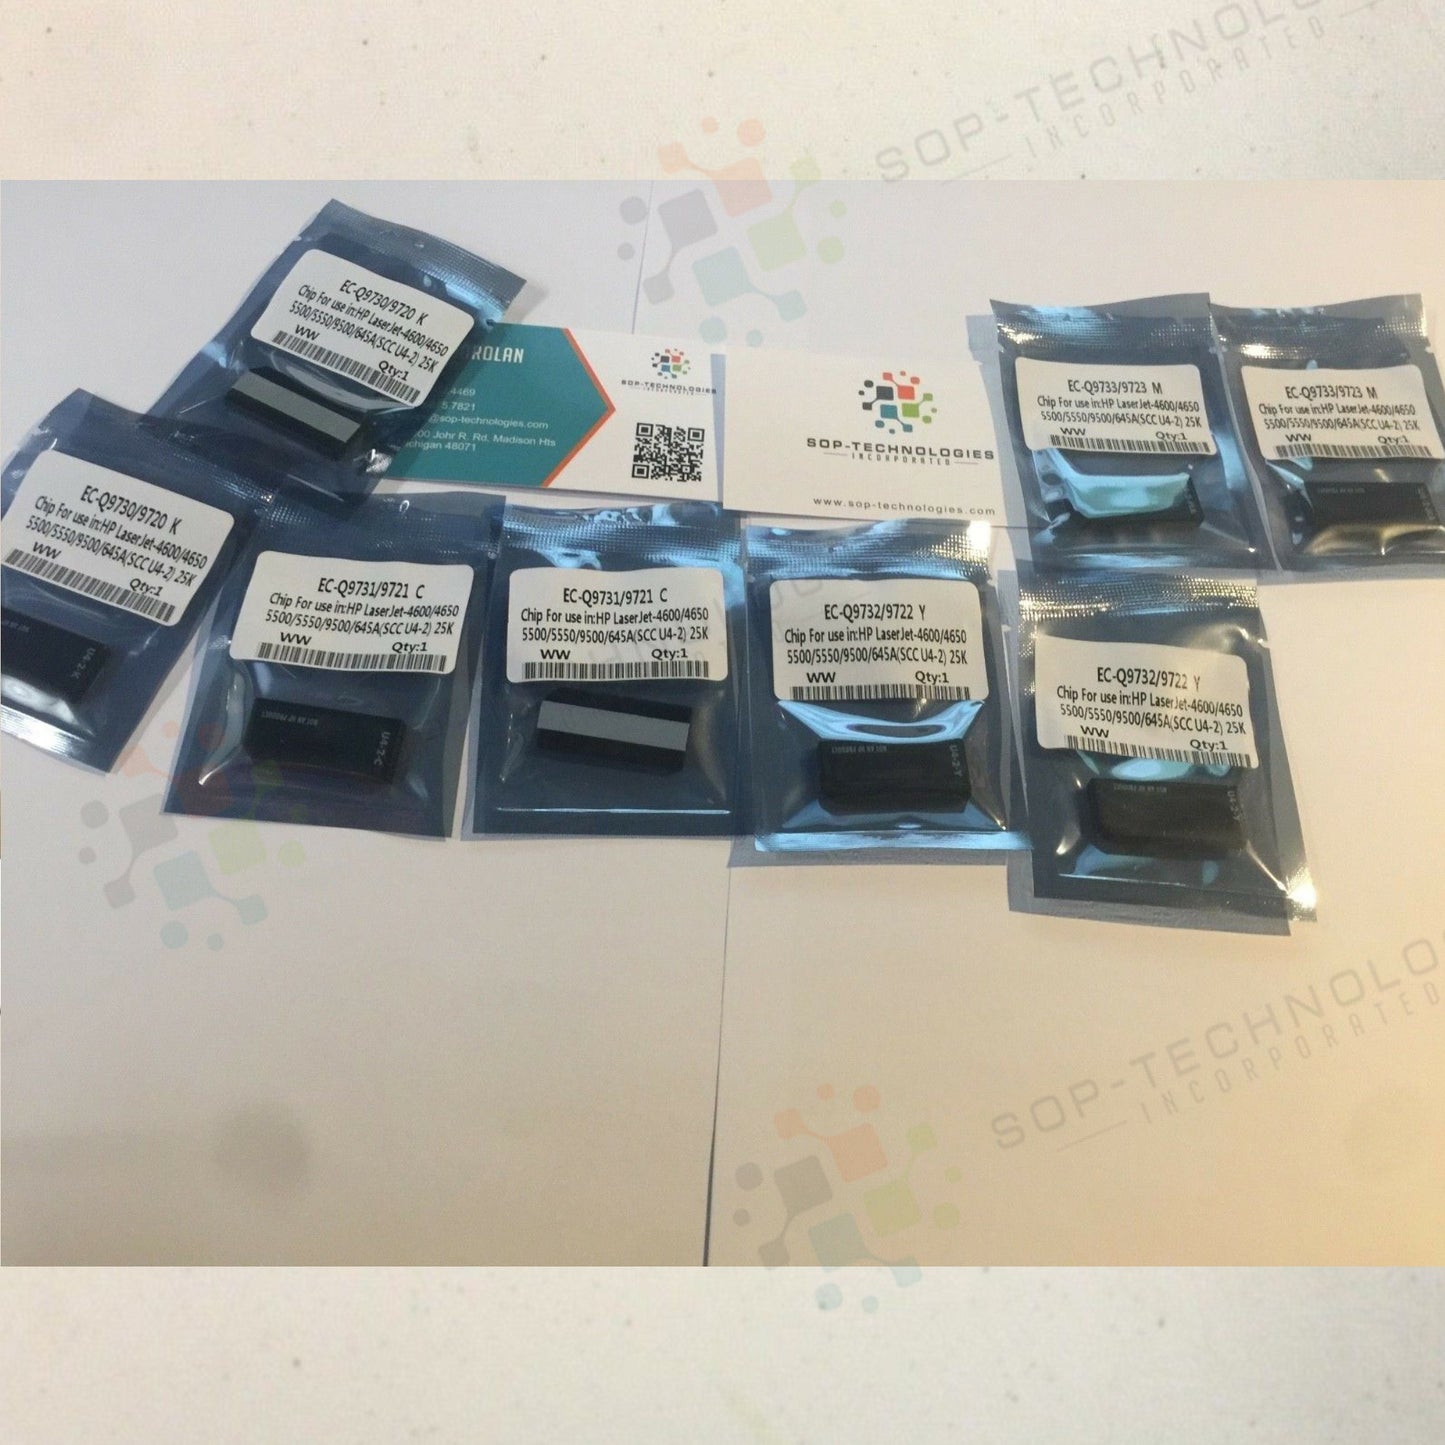 8 Pack Drum Reset Refill Chip for HP Color LaserJet 9500 - SOP-TECHNOLOGIES, INC.